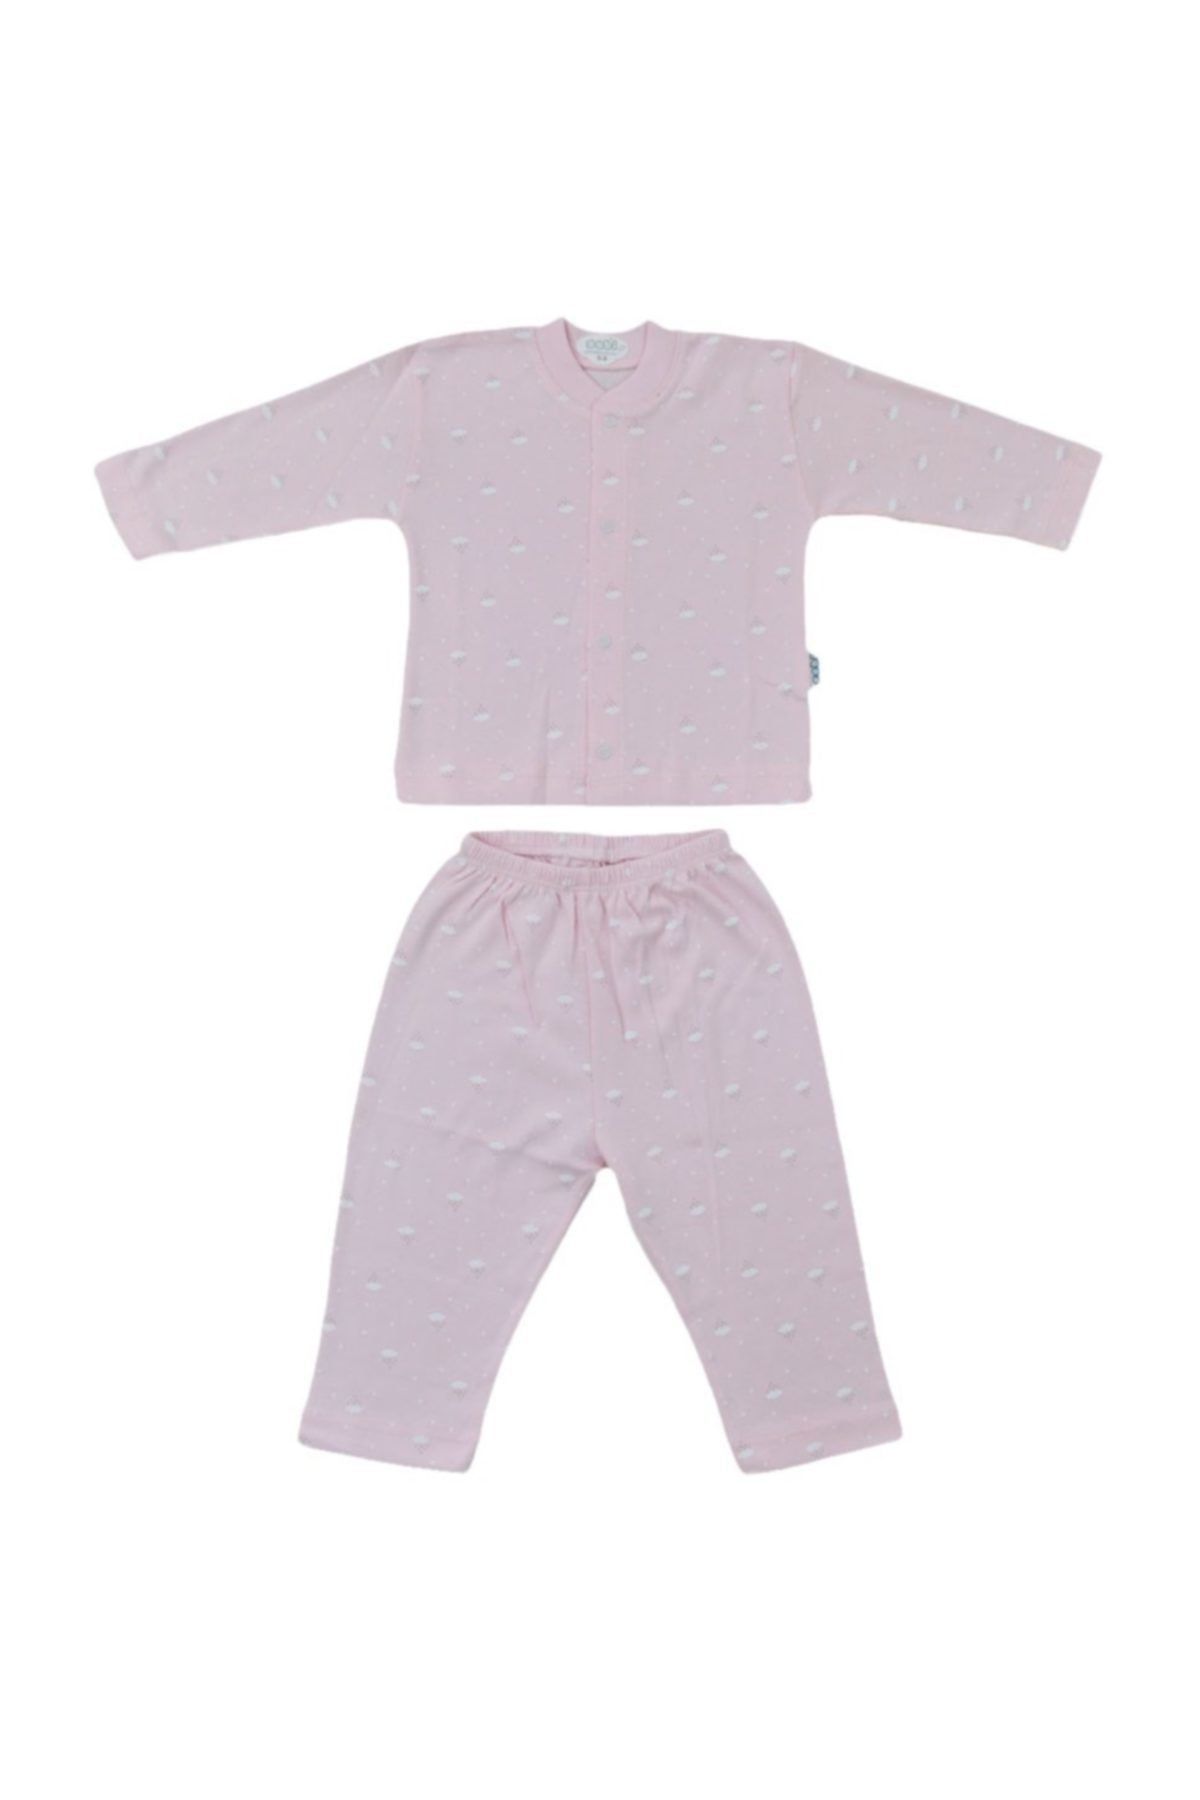 Sebi Bebe Bebek Pijama Takımı 2319